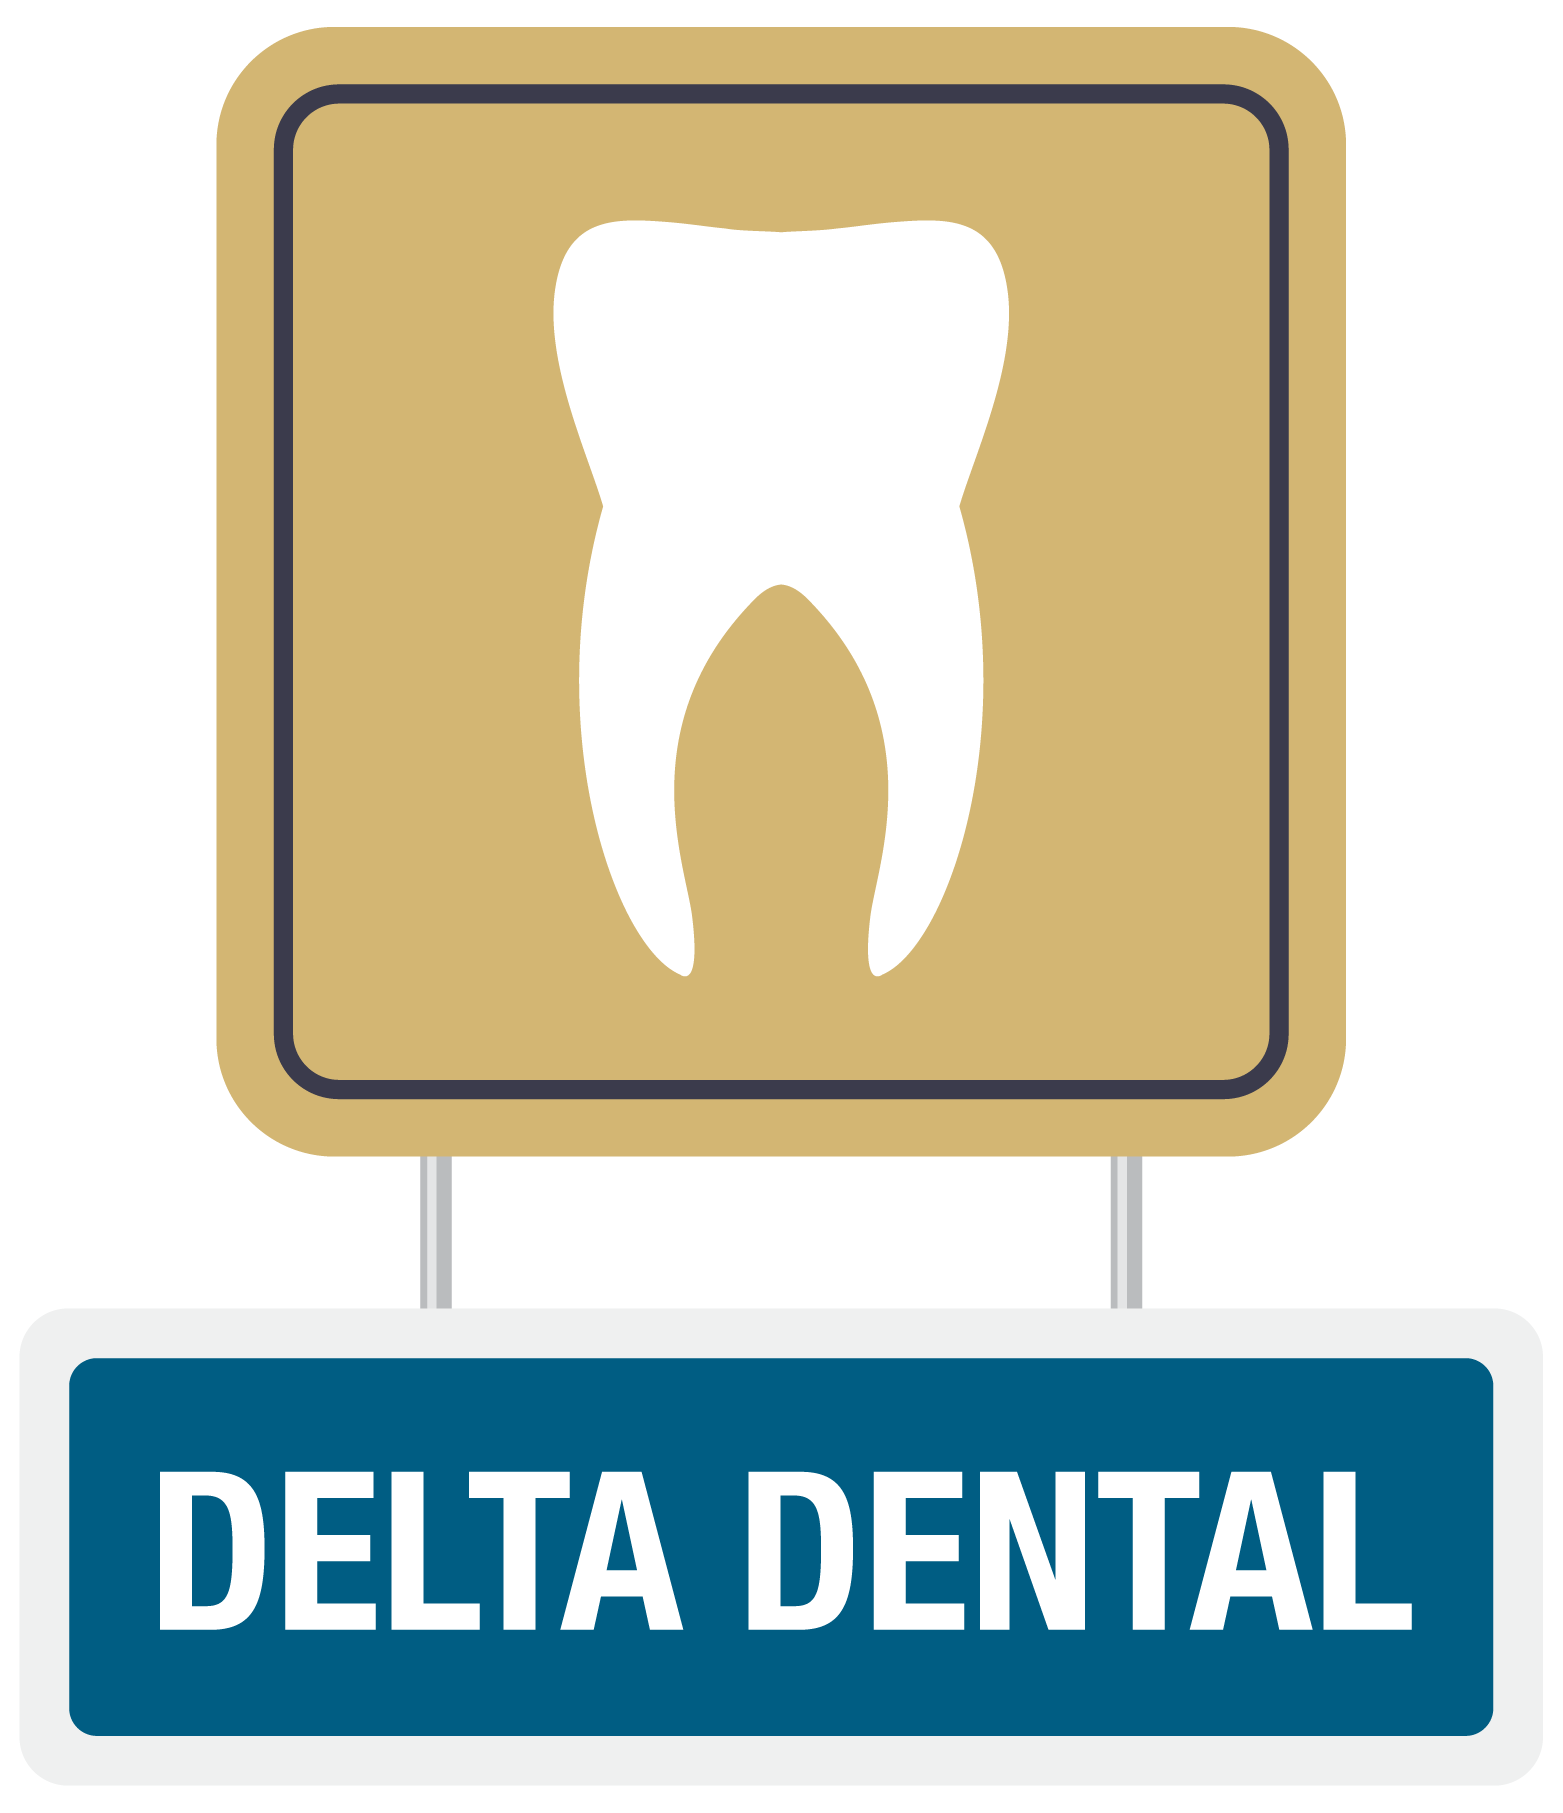 Delta Dental fair page - click to access